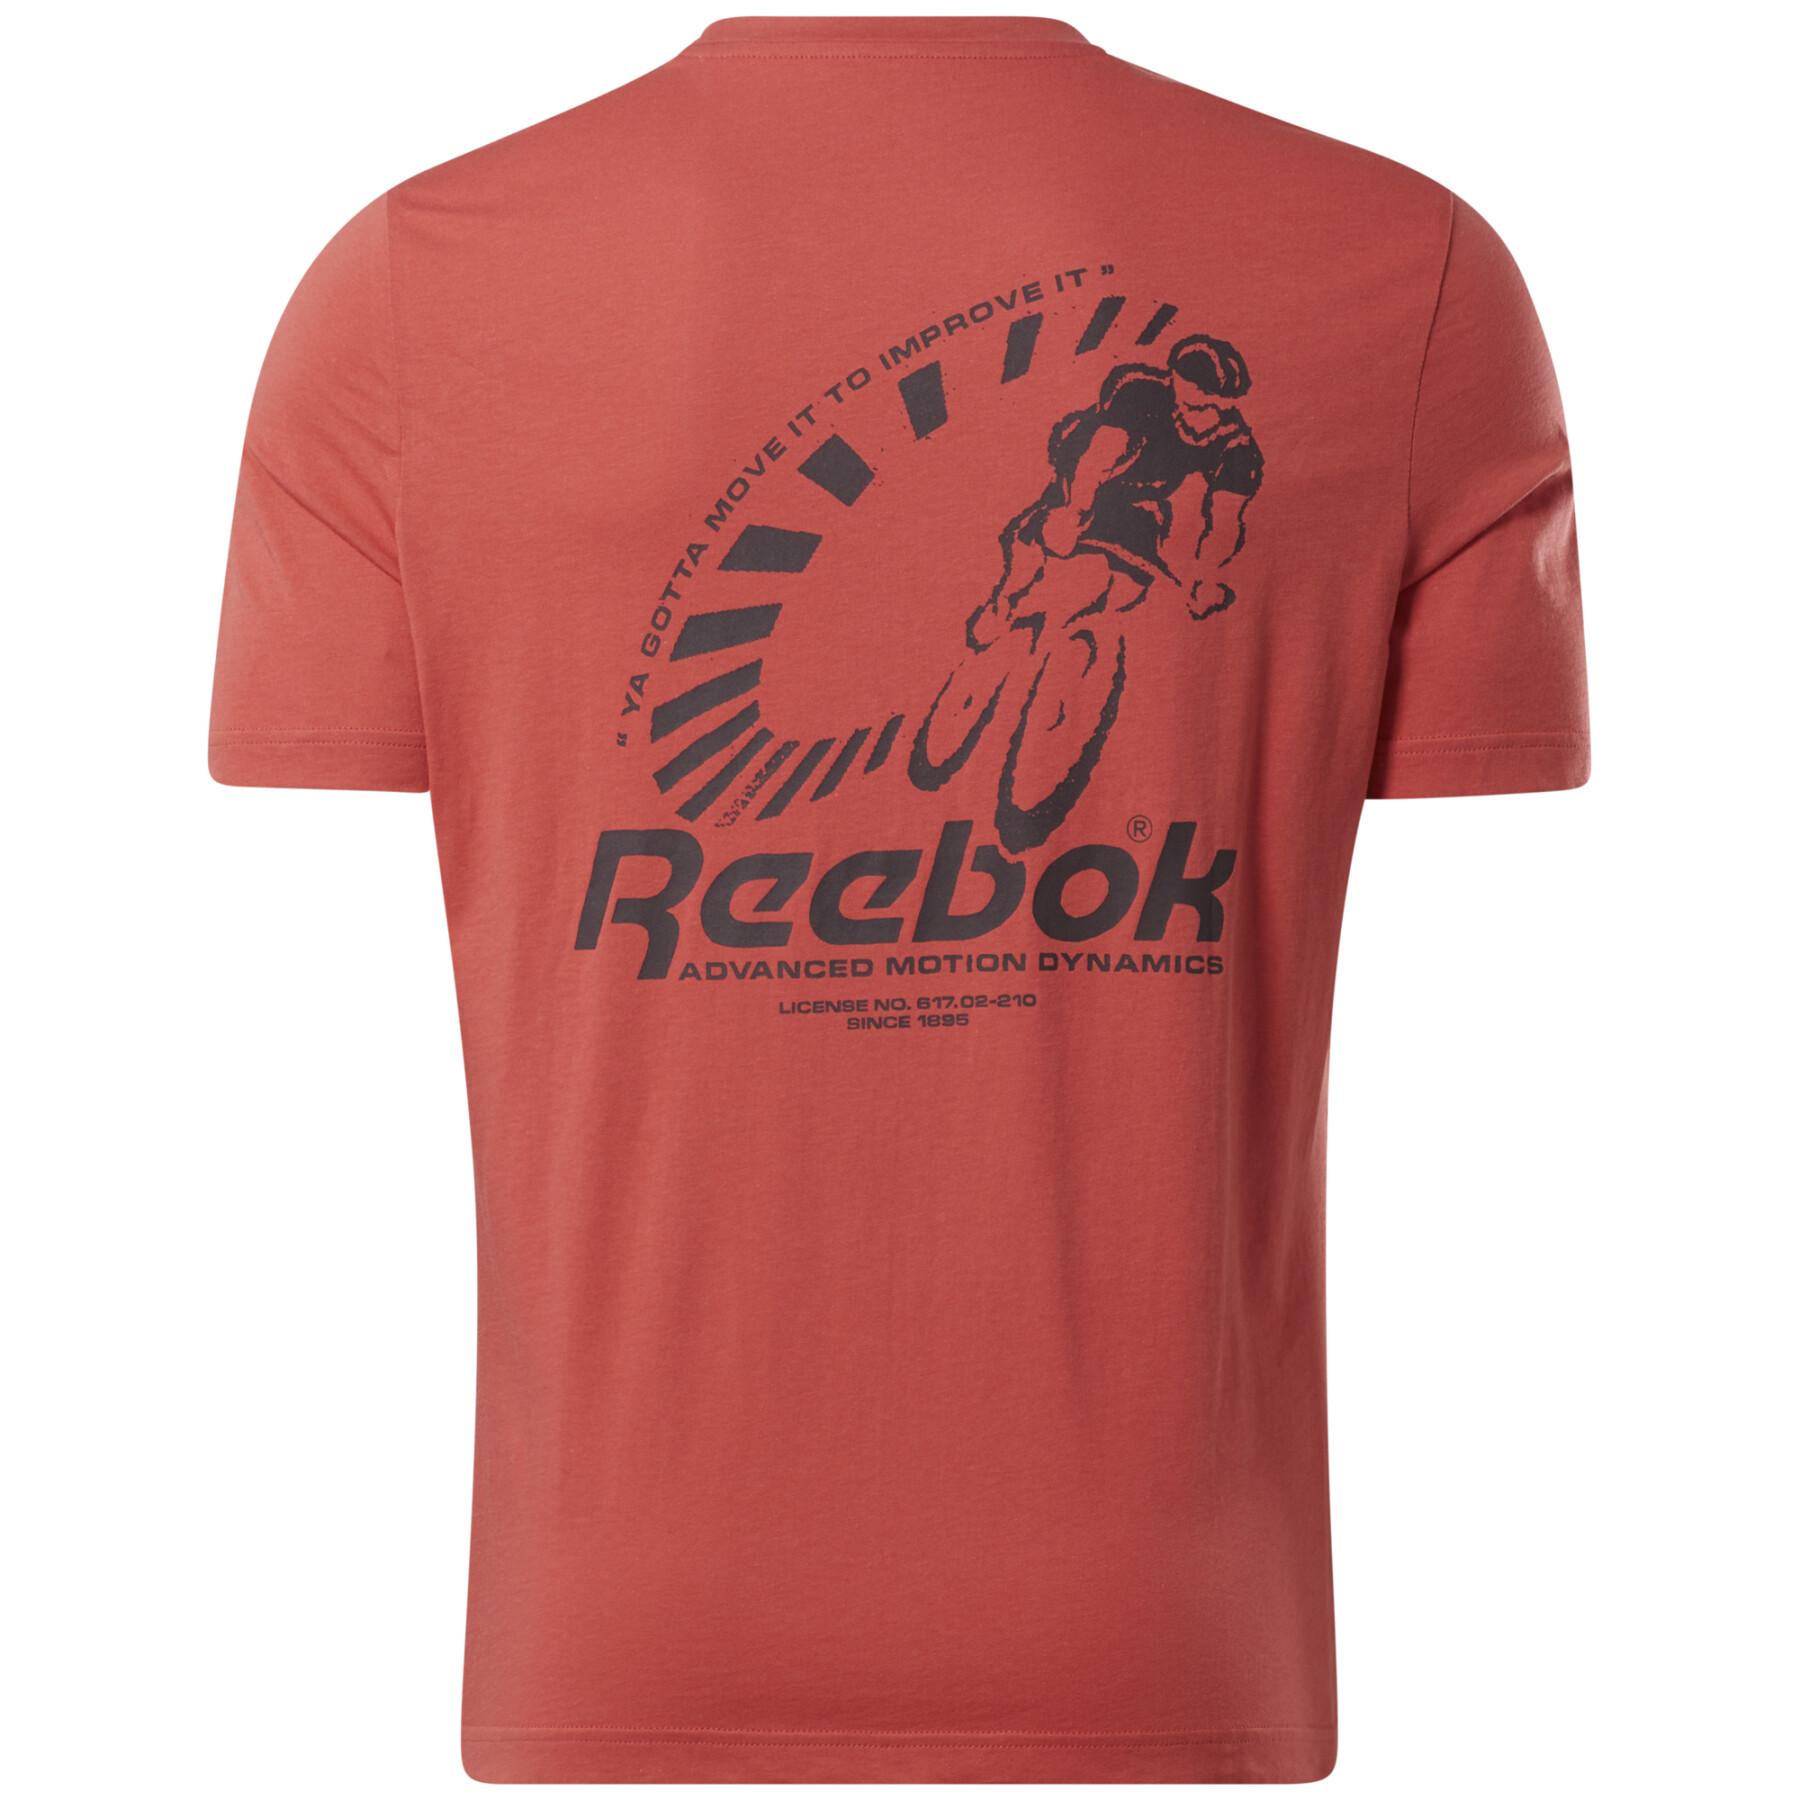 T-shirt Reebok Graphic Series Advanced Motion